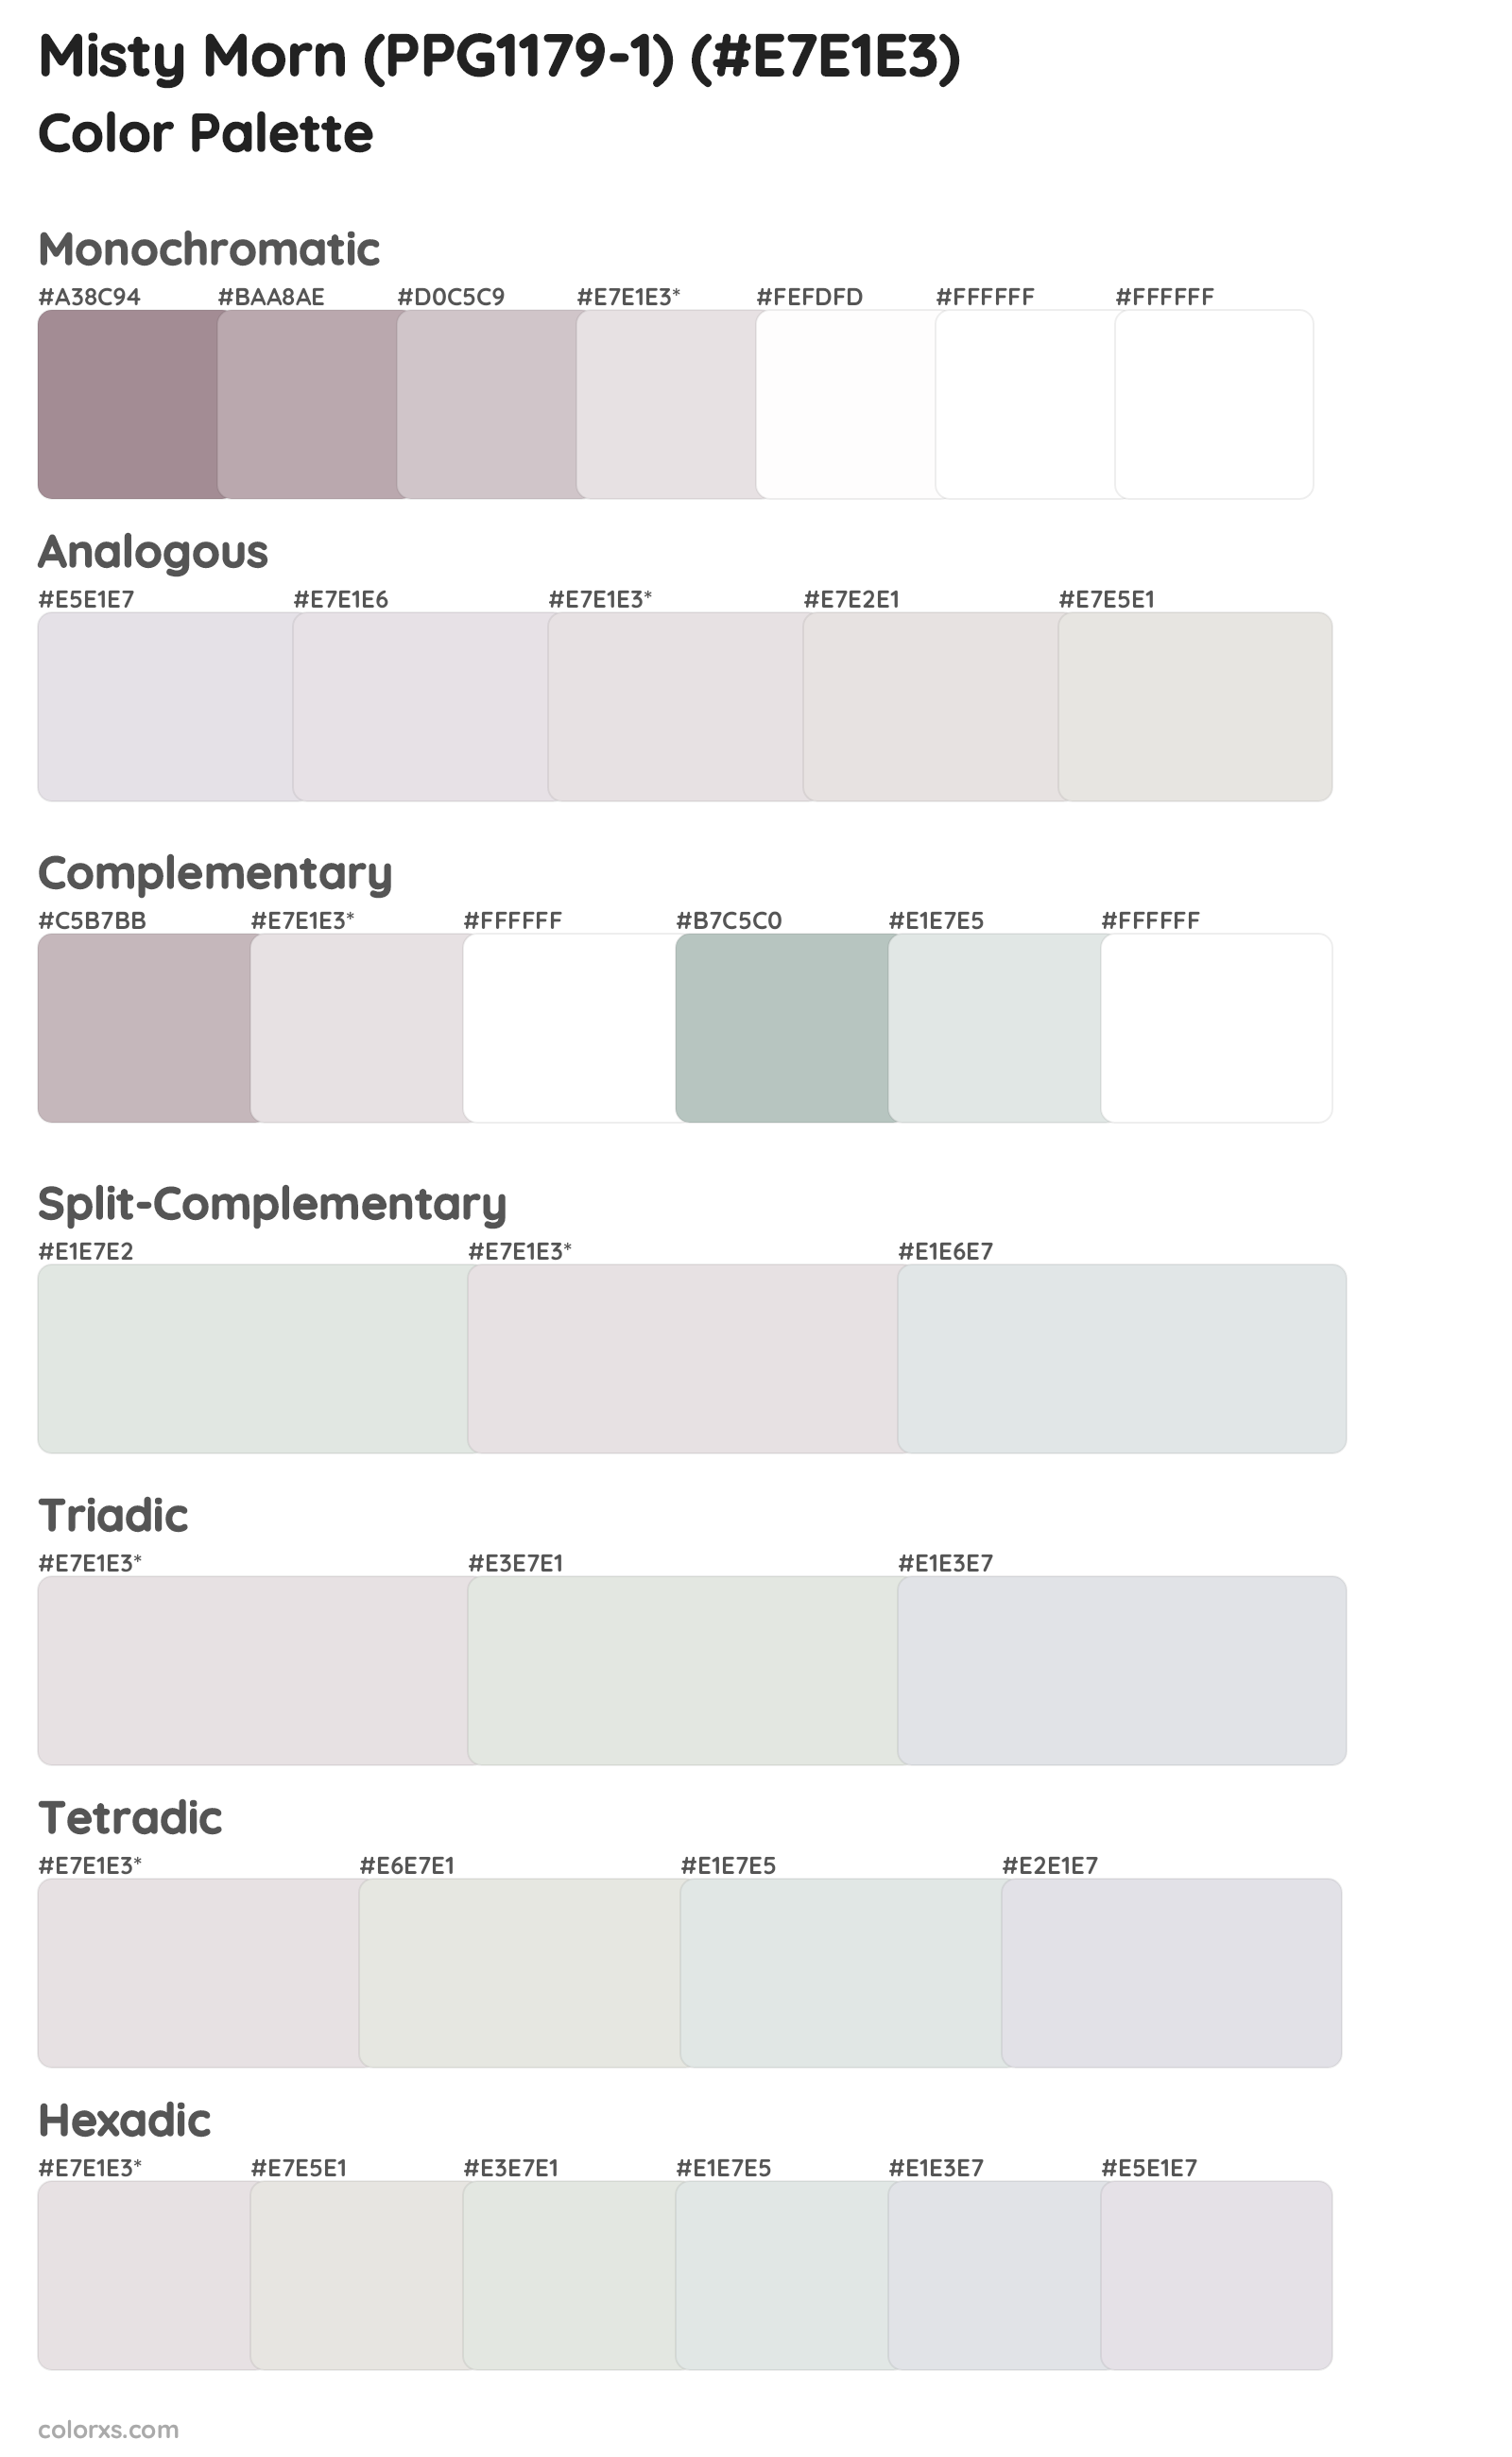 Misty Morn (PPG1179-1) Color Scheme Palettes